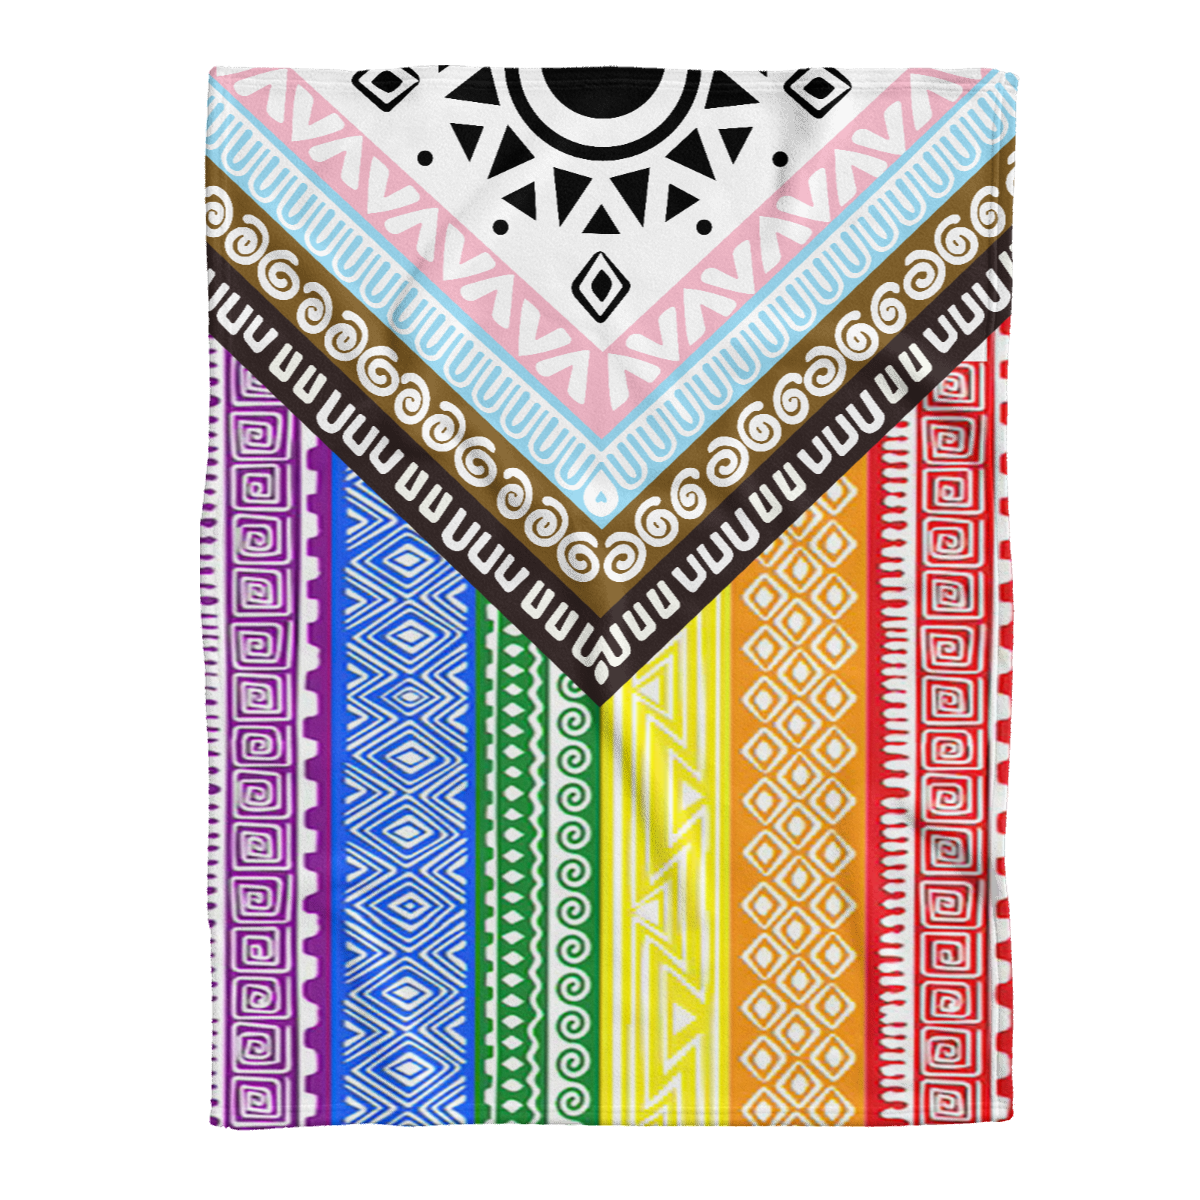 Progress Pride Blanket/ Rainbow Blanket/ Lgbt Quilt Blanket/ Gay Pride Blanket/ Inclusive Pride